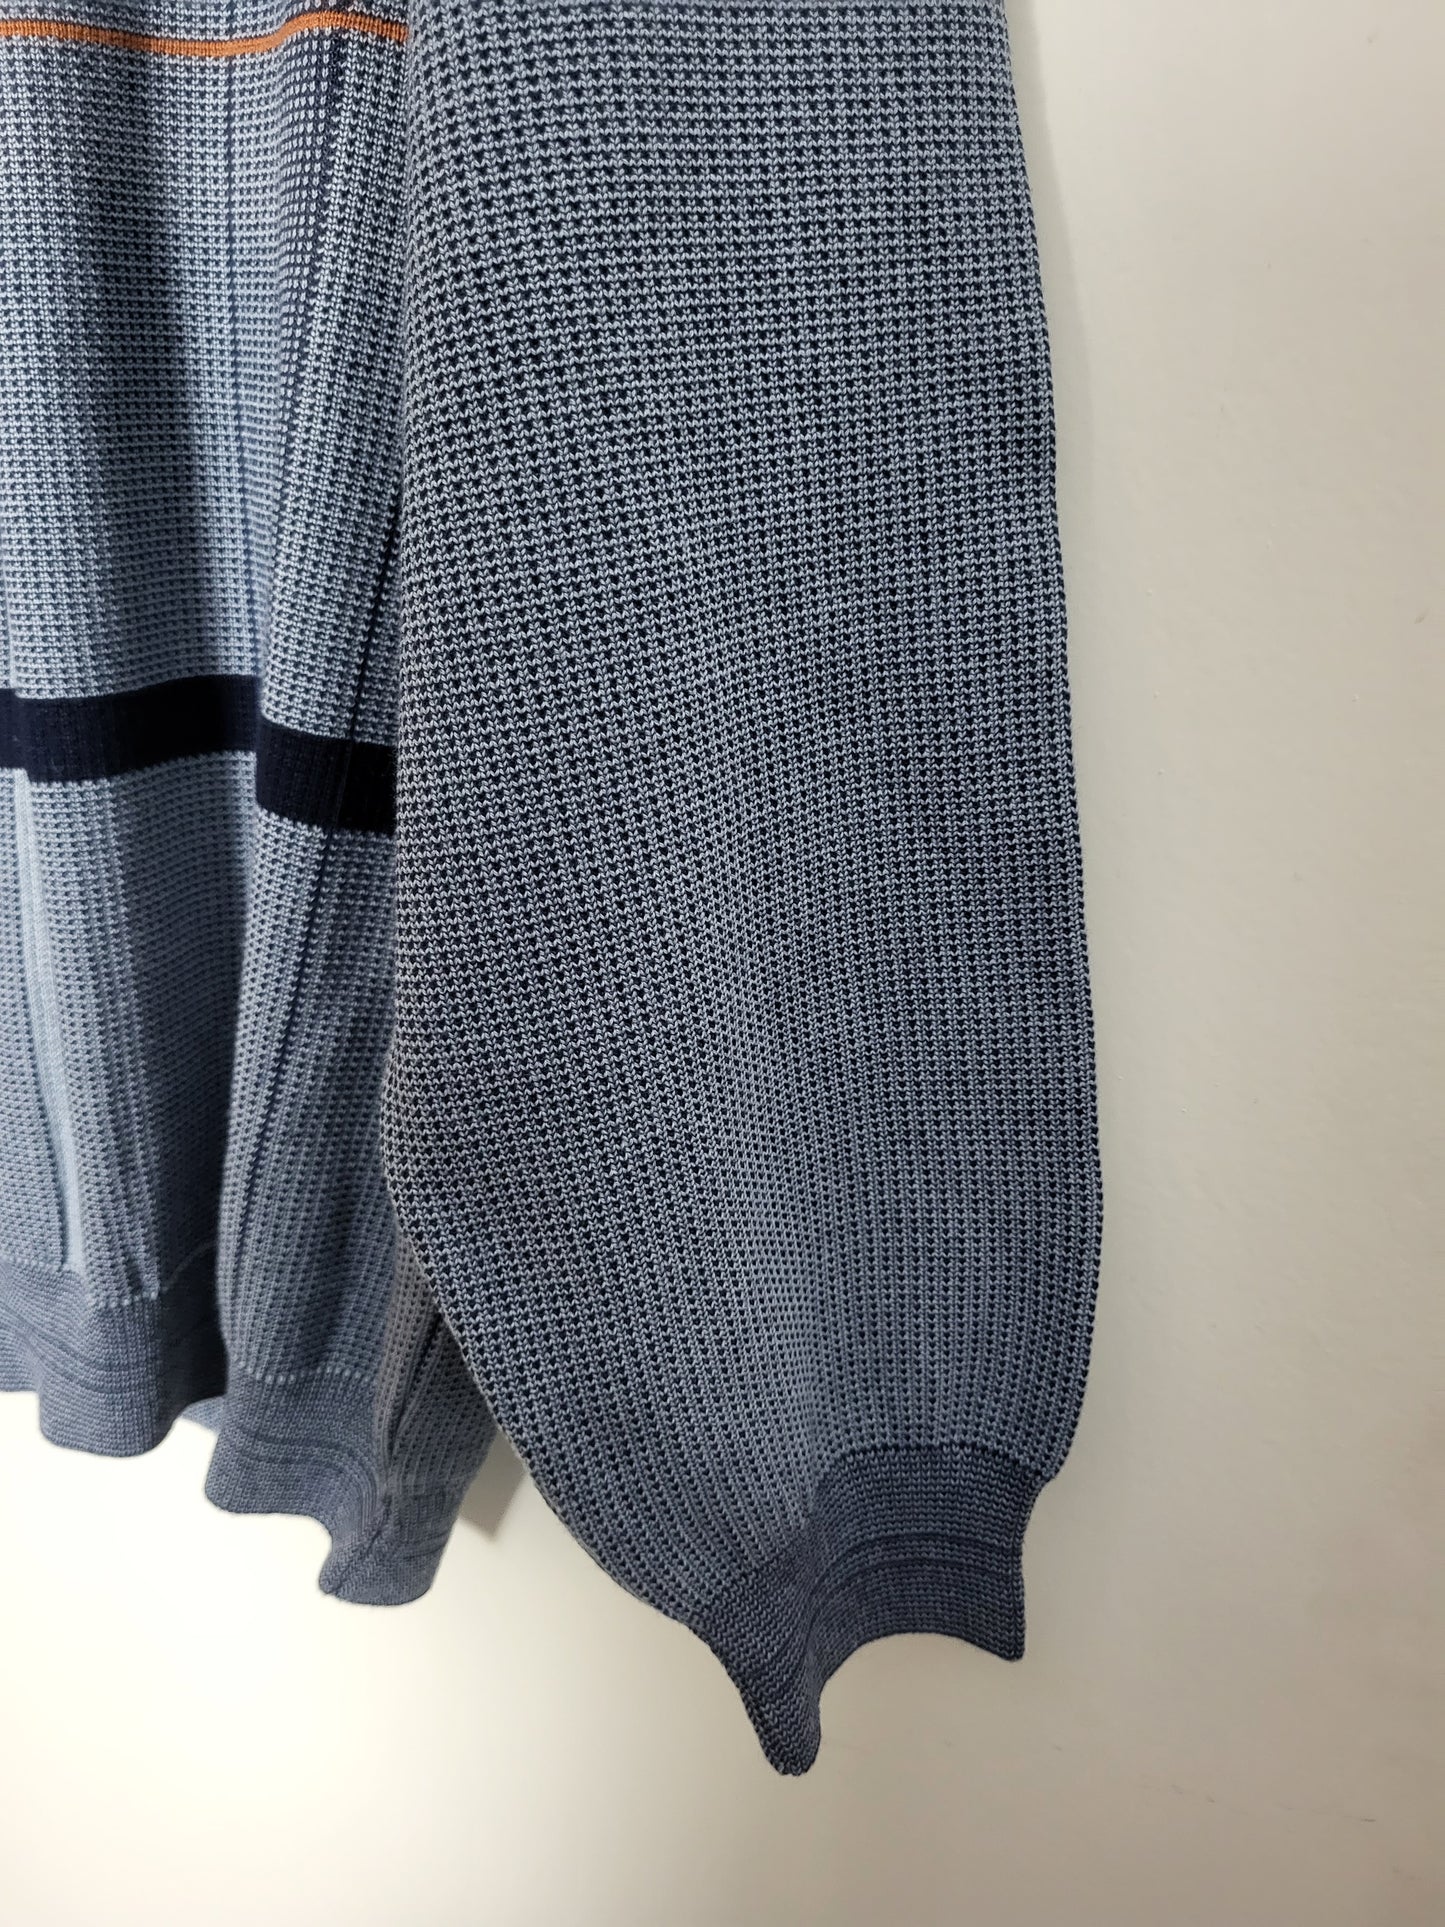 BAILEYS Menswear - Pullover - Muster - Vintage Italy - Grau mit Muster - Herren - XL